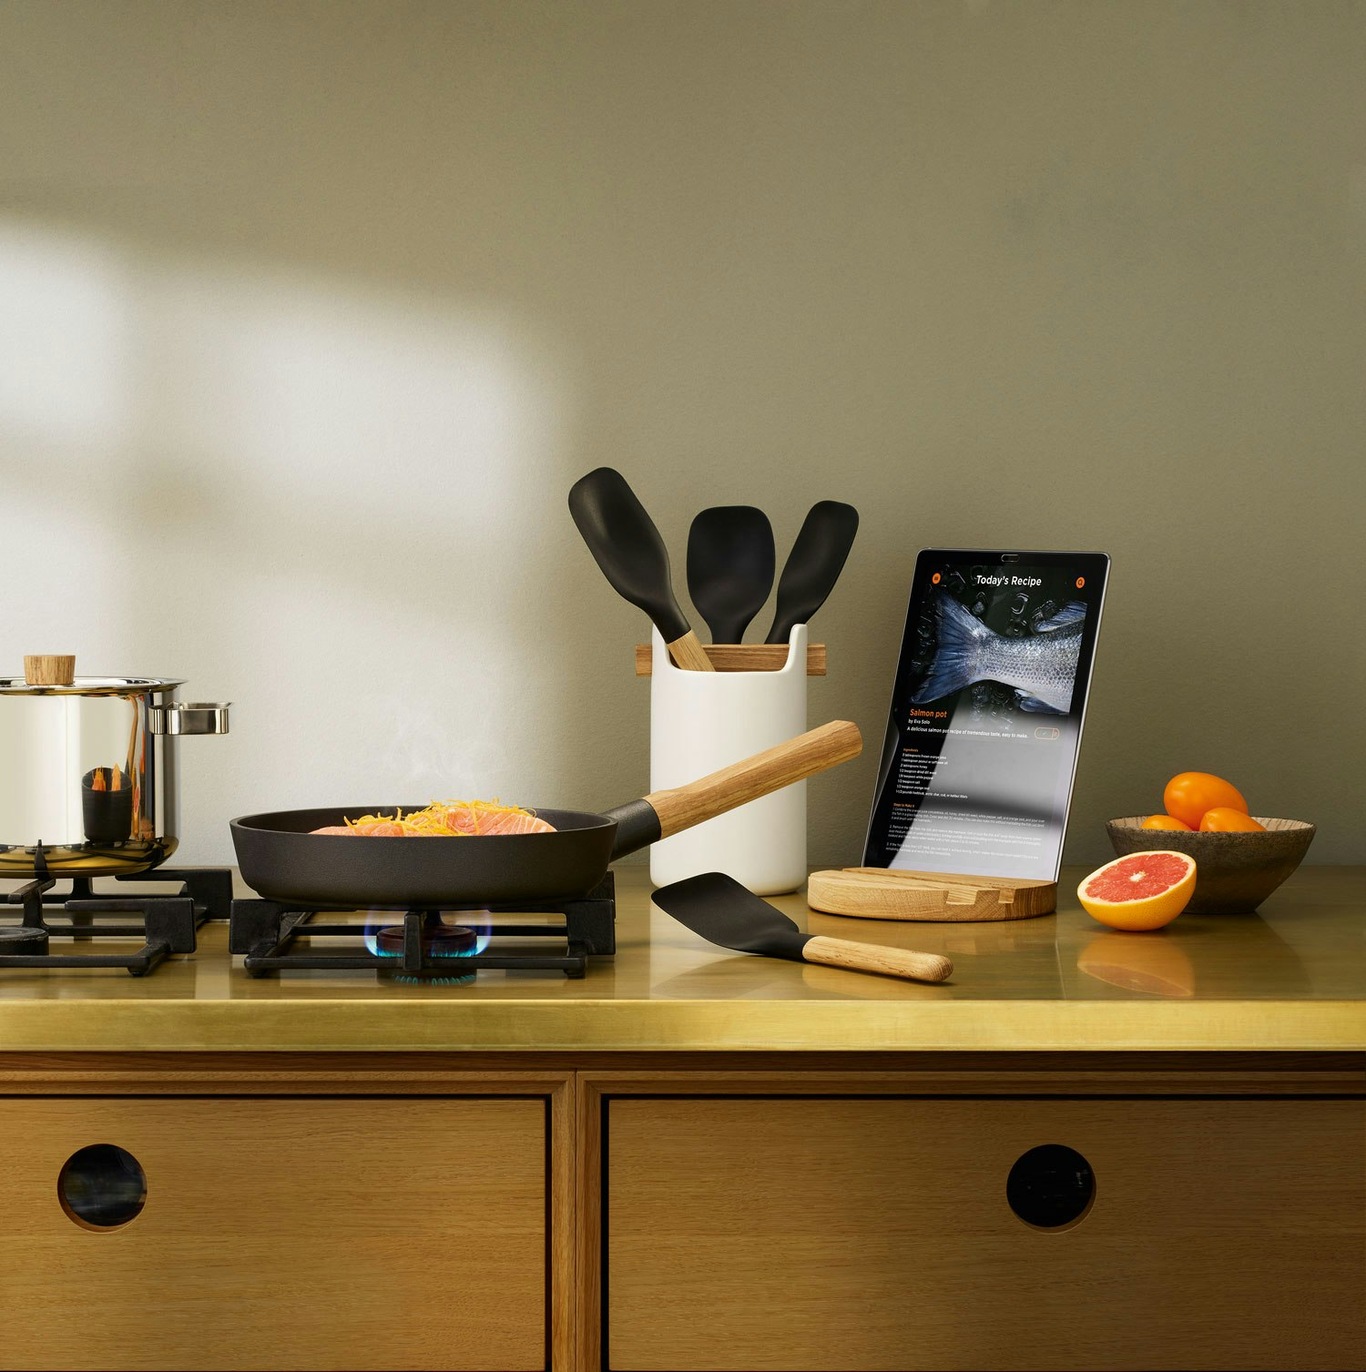 https://royaldesign.com/image/2/eva-solo-nordic-kitchen-stirrer-2?w=800&quality=80